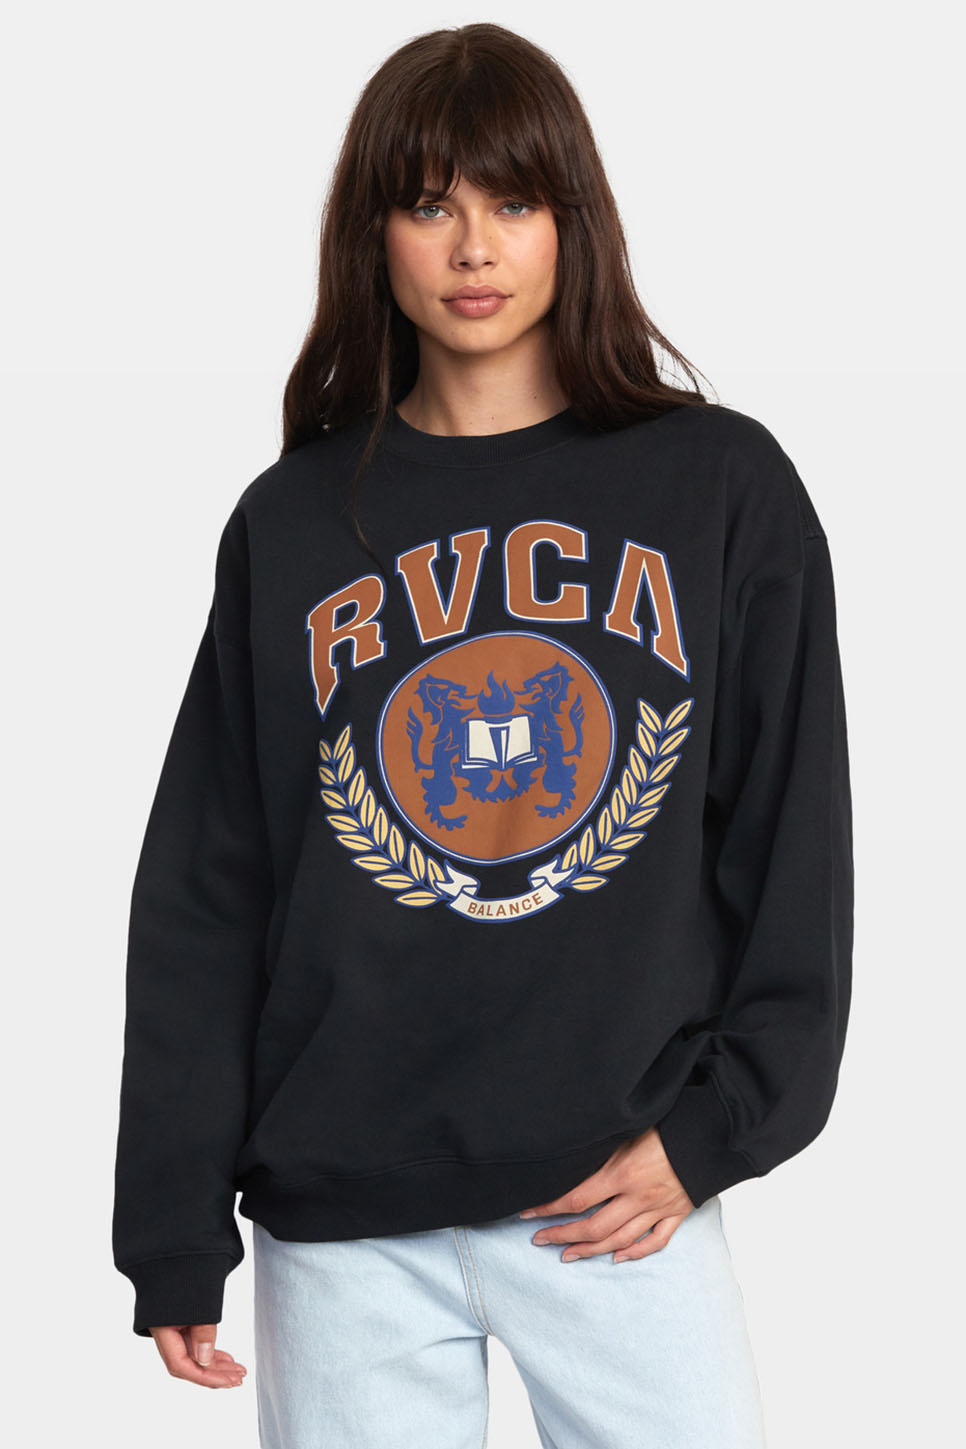 RVCA - Letterman Sweatshirt - RVCA Black - Front